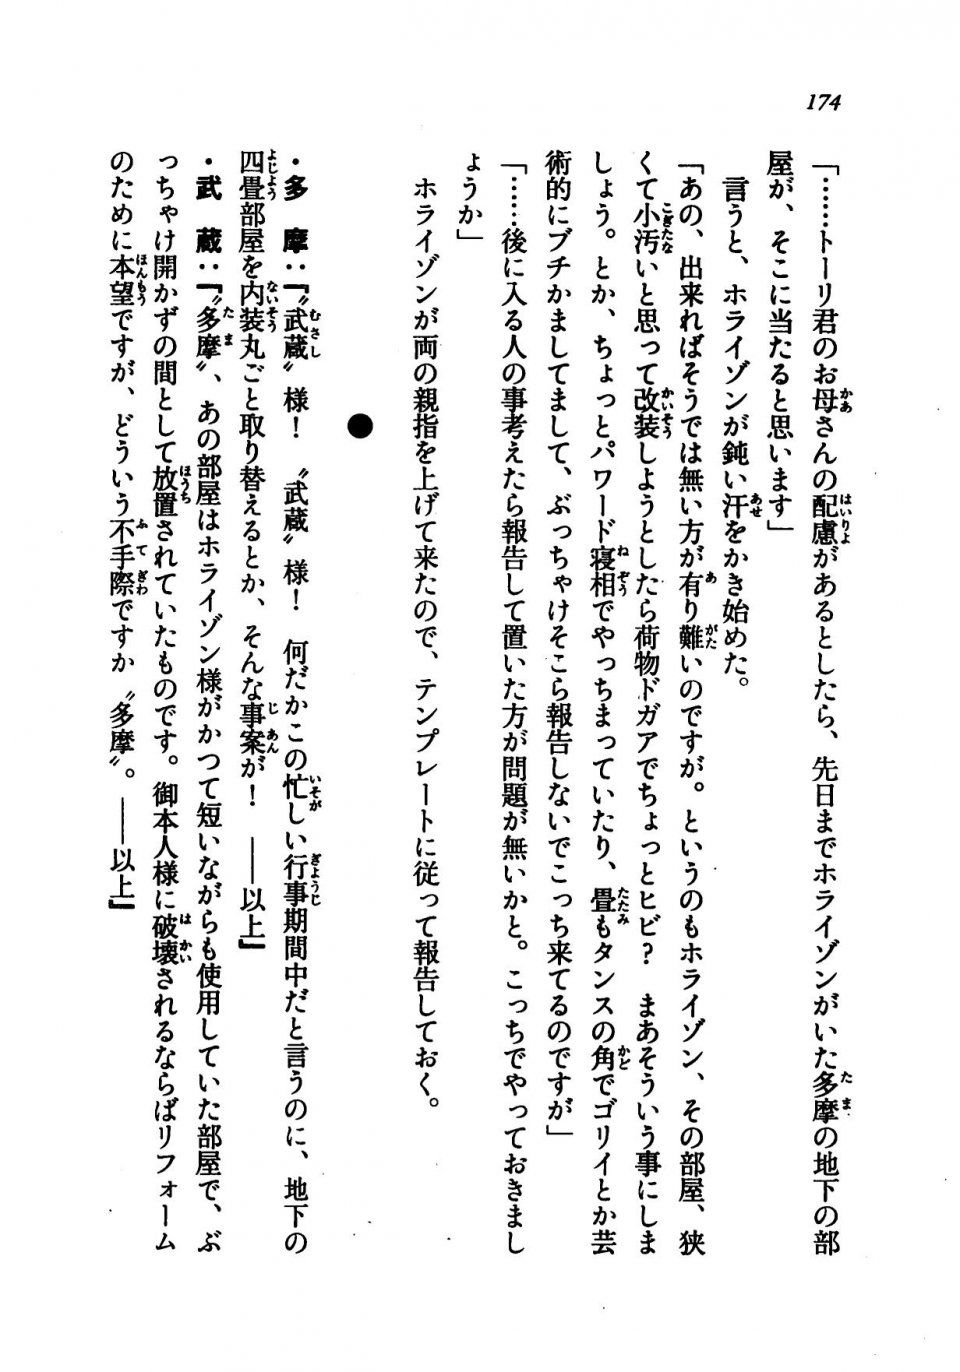 Kyoukai Senjou no Horizon LN Vol 21(8C) Part 1 - Photo #173